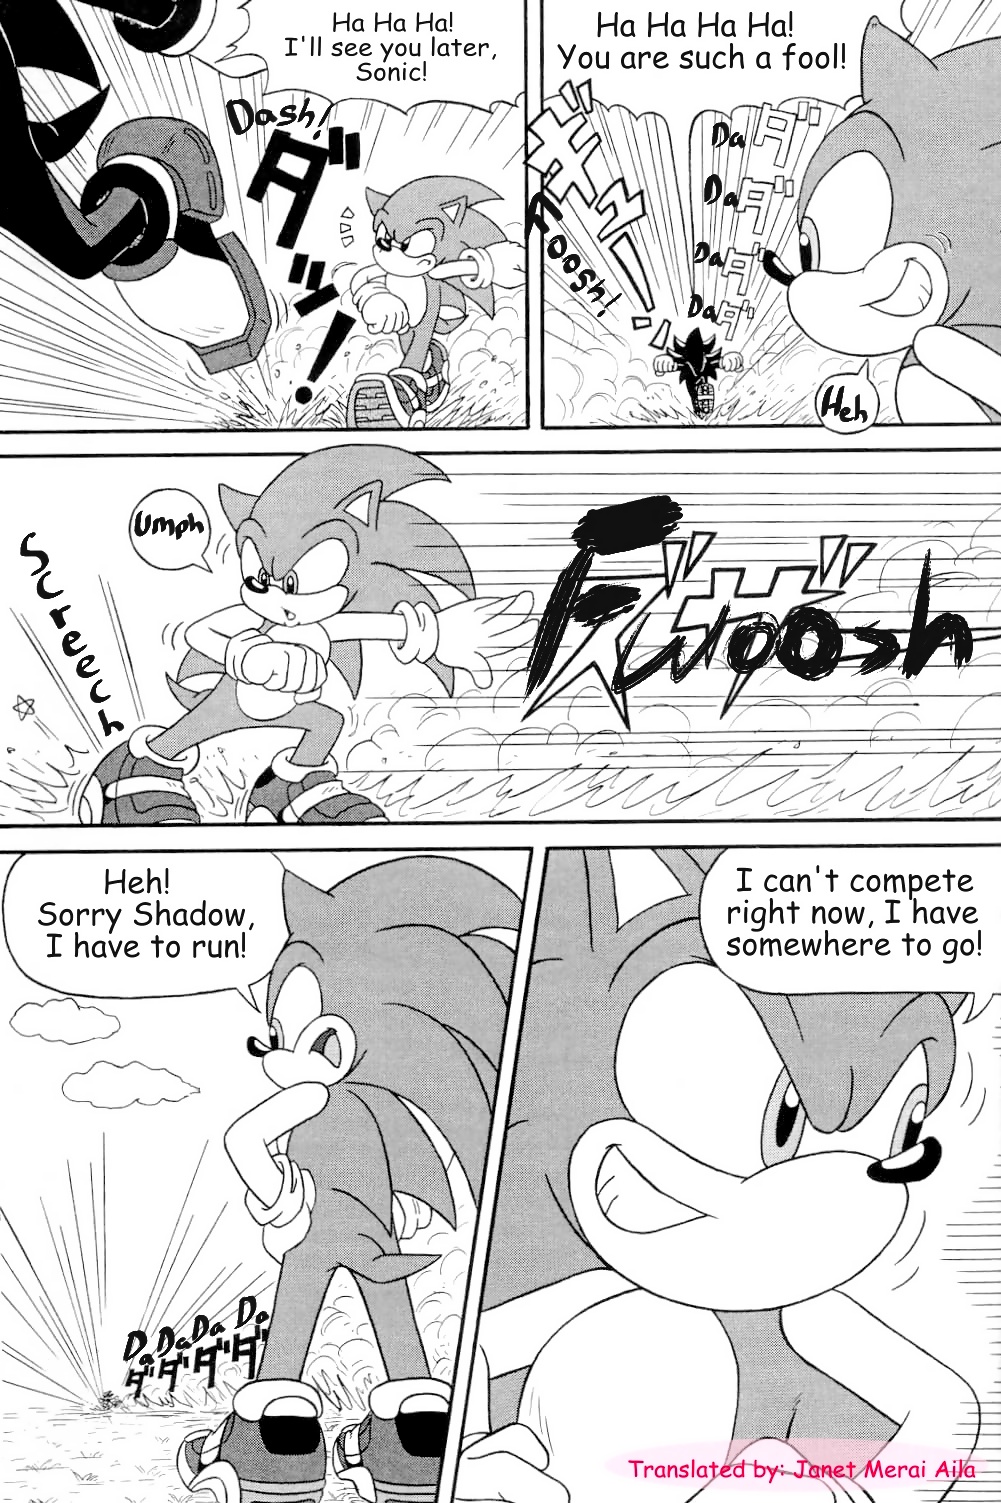 [Furry Bomb Factory] Furry Bomb #1 (Sonic The Hedgehog) [English] [Rewrite] {Janet Merai Aila} 